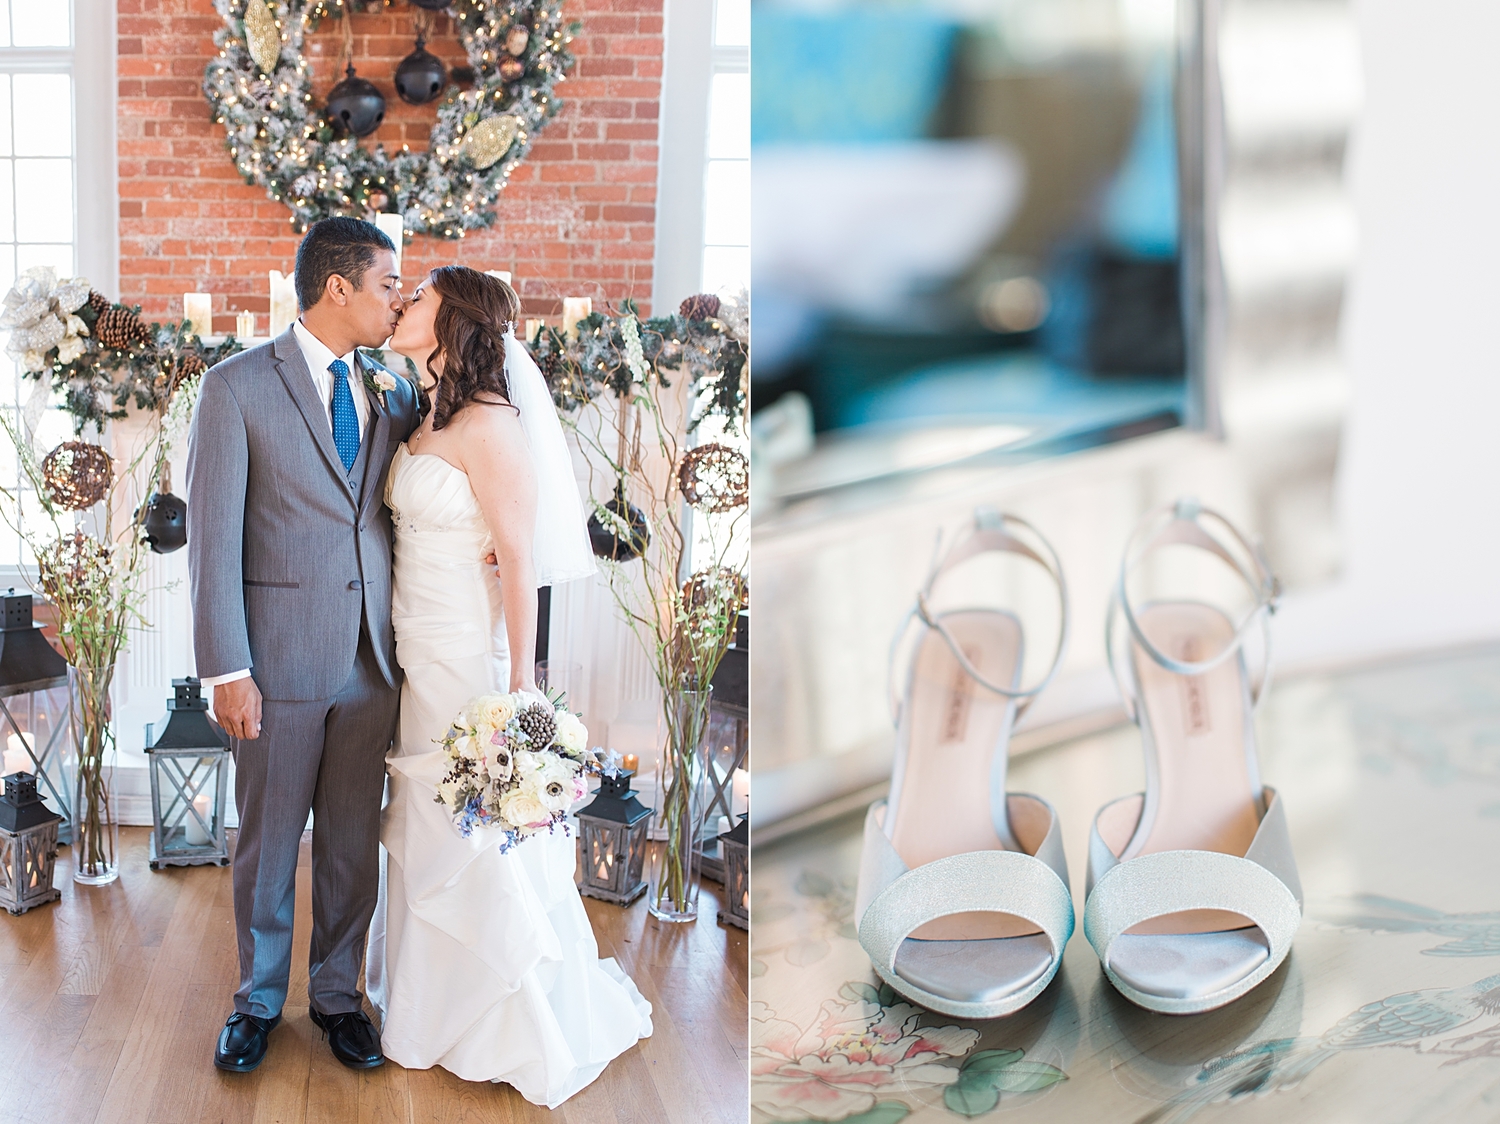 Top Wedding Photographers, Durham, NC - Zimbro Photography Studios